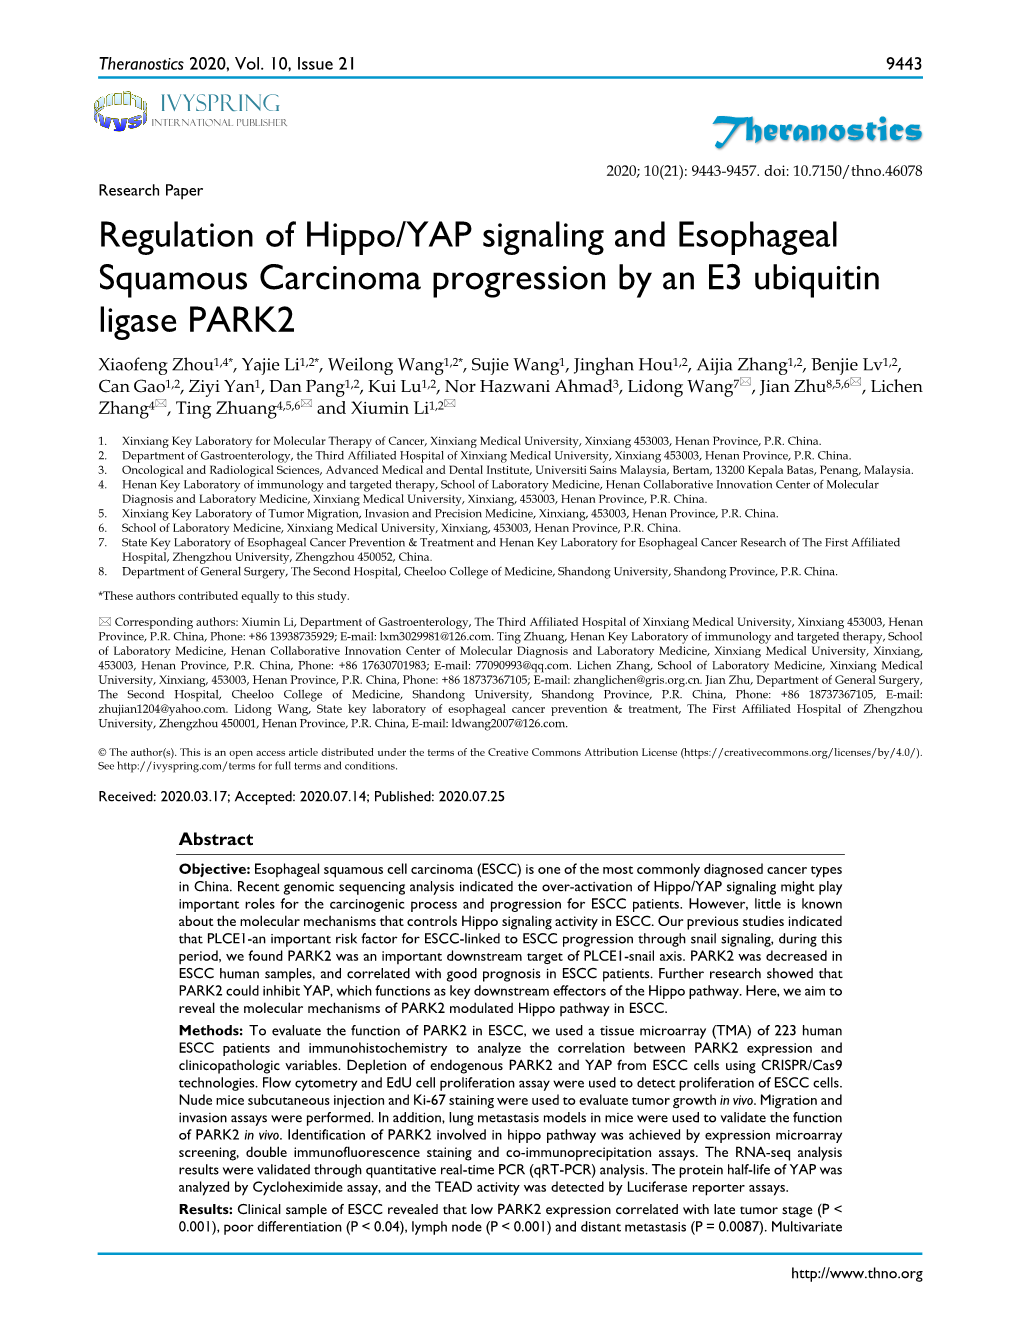 Theranostics Regulation of Hippo/YAP Signaling And